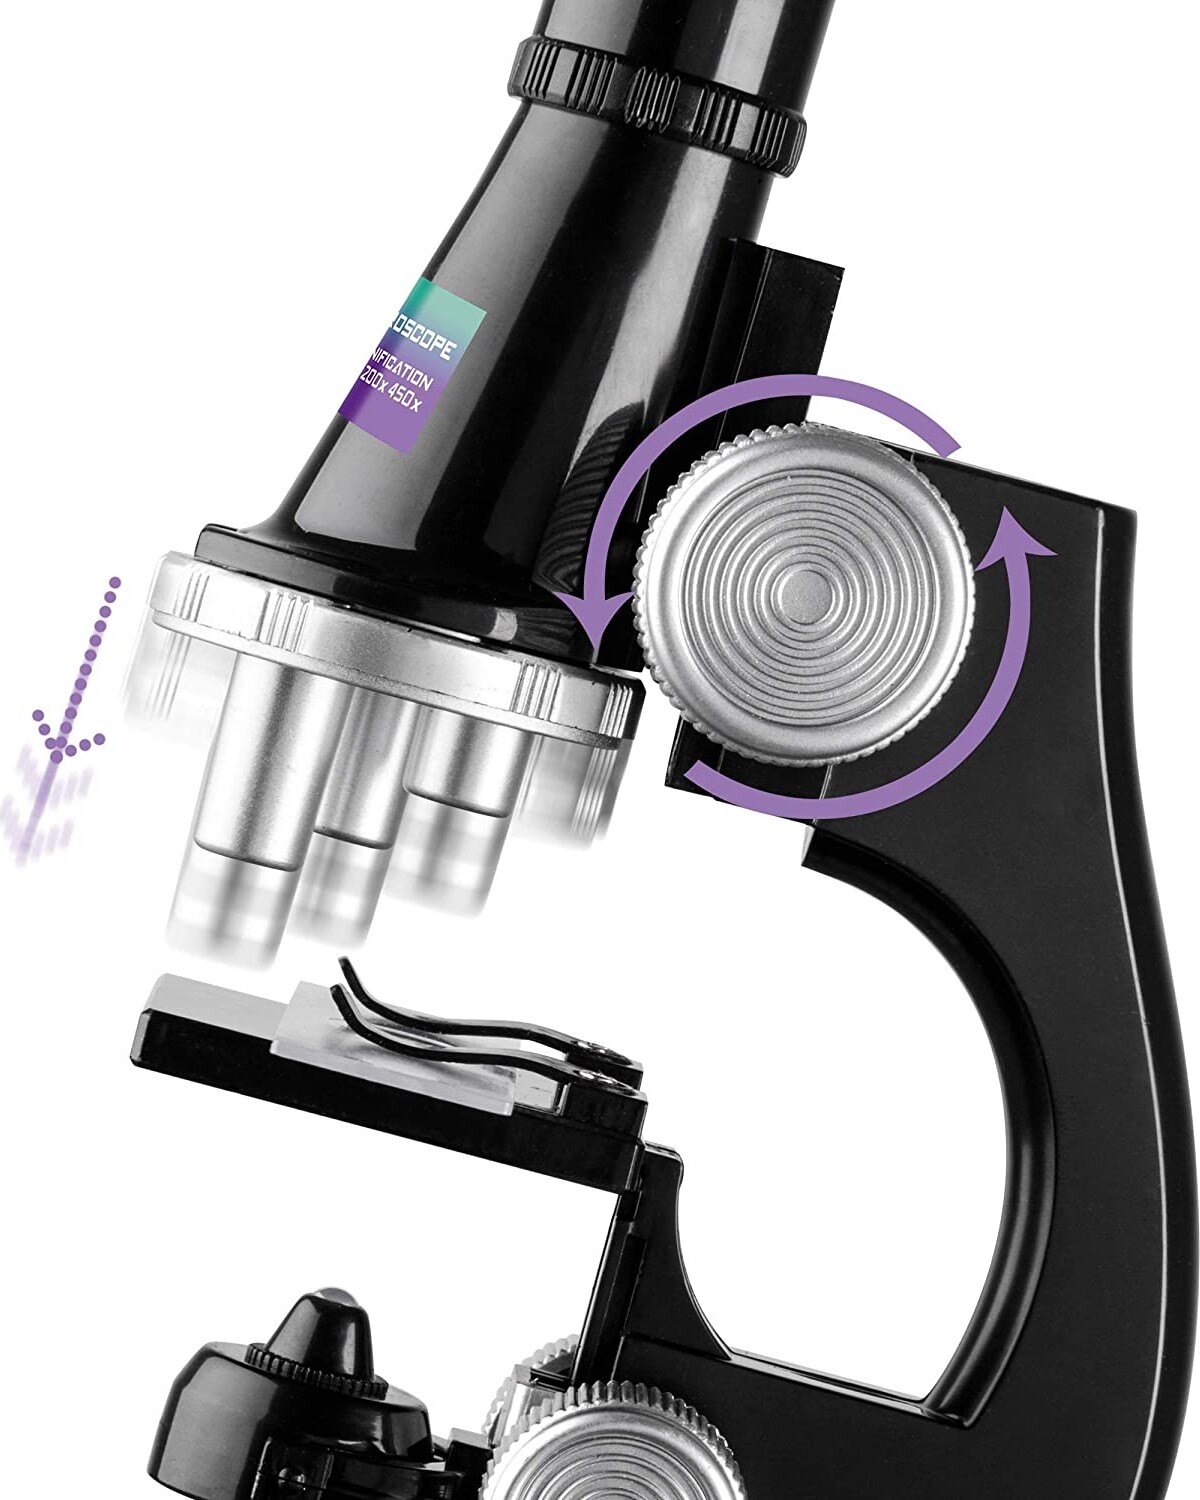 Alga Science - HD Microscope, 100/250/500X